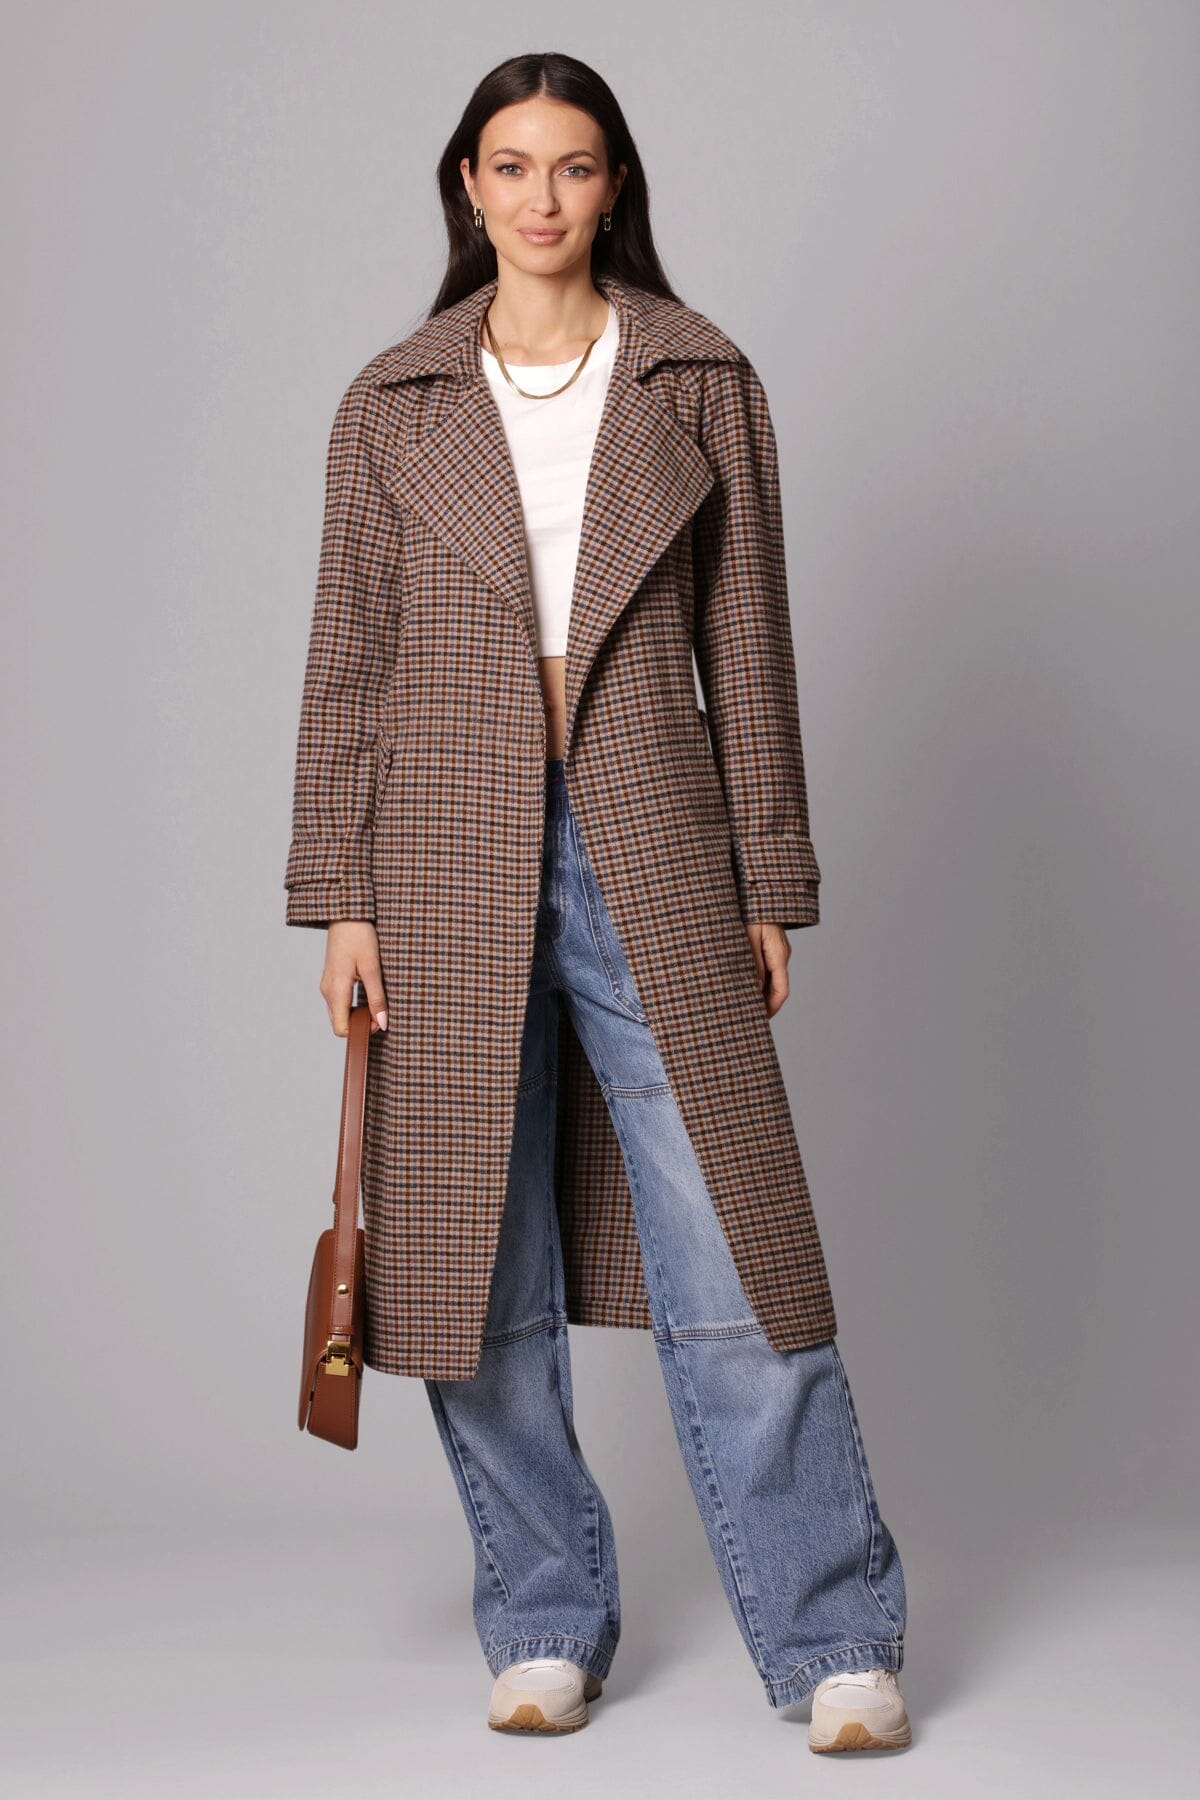 open front drape trench coat brown blue plaid outerwear - figure flattering designer fashion coats for women